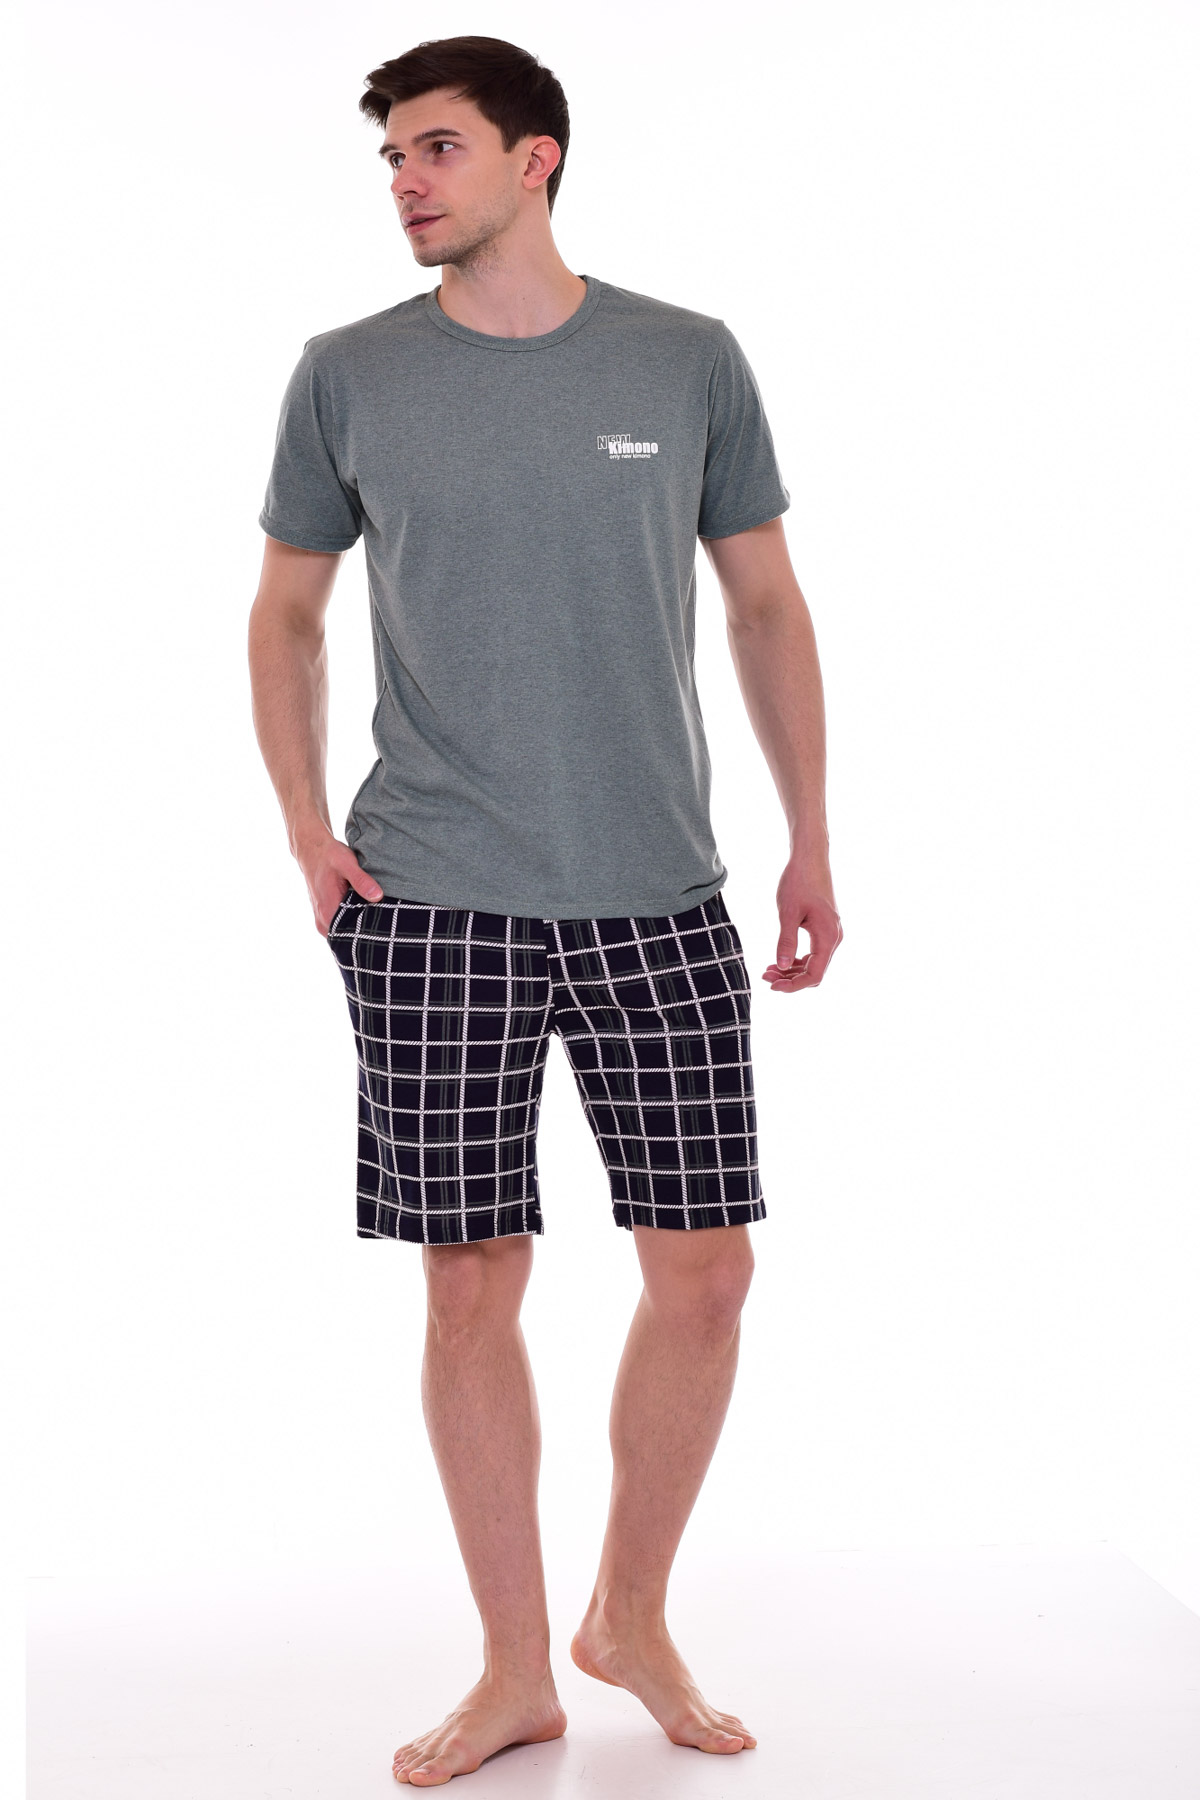 Пижама мужская НК 9-190 футболка шорты Текстиль Центр 